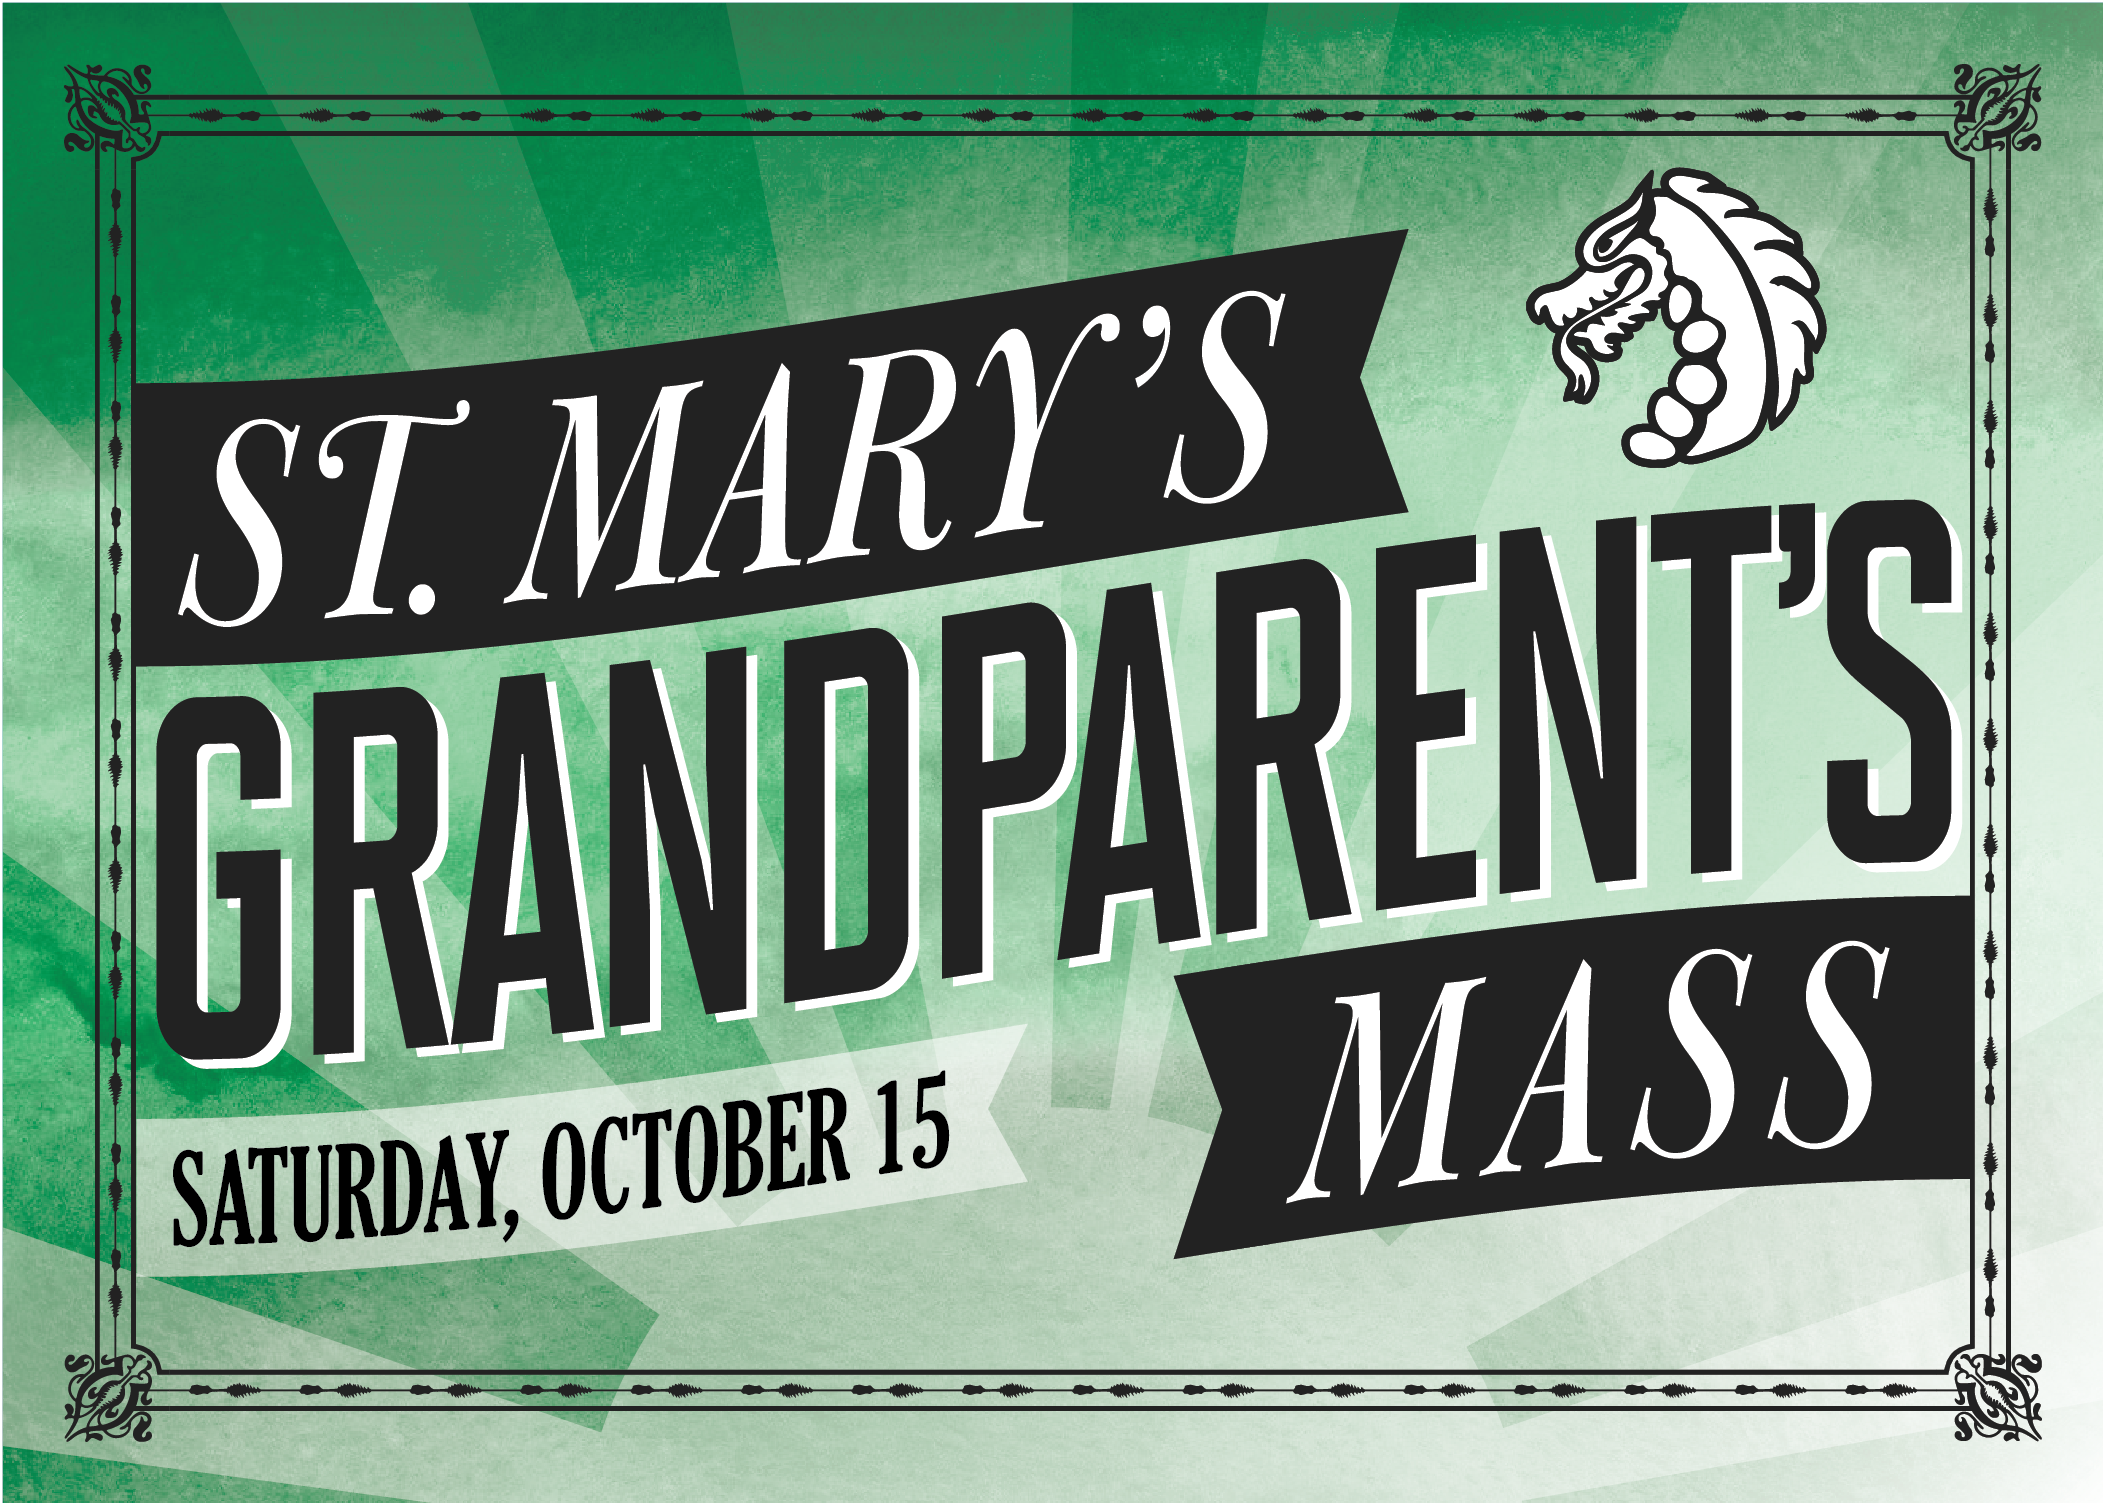 Grandparents Mass event details.